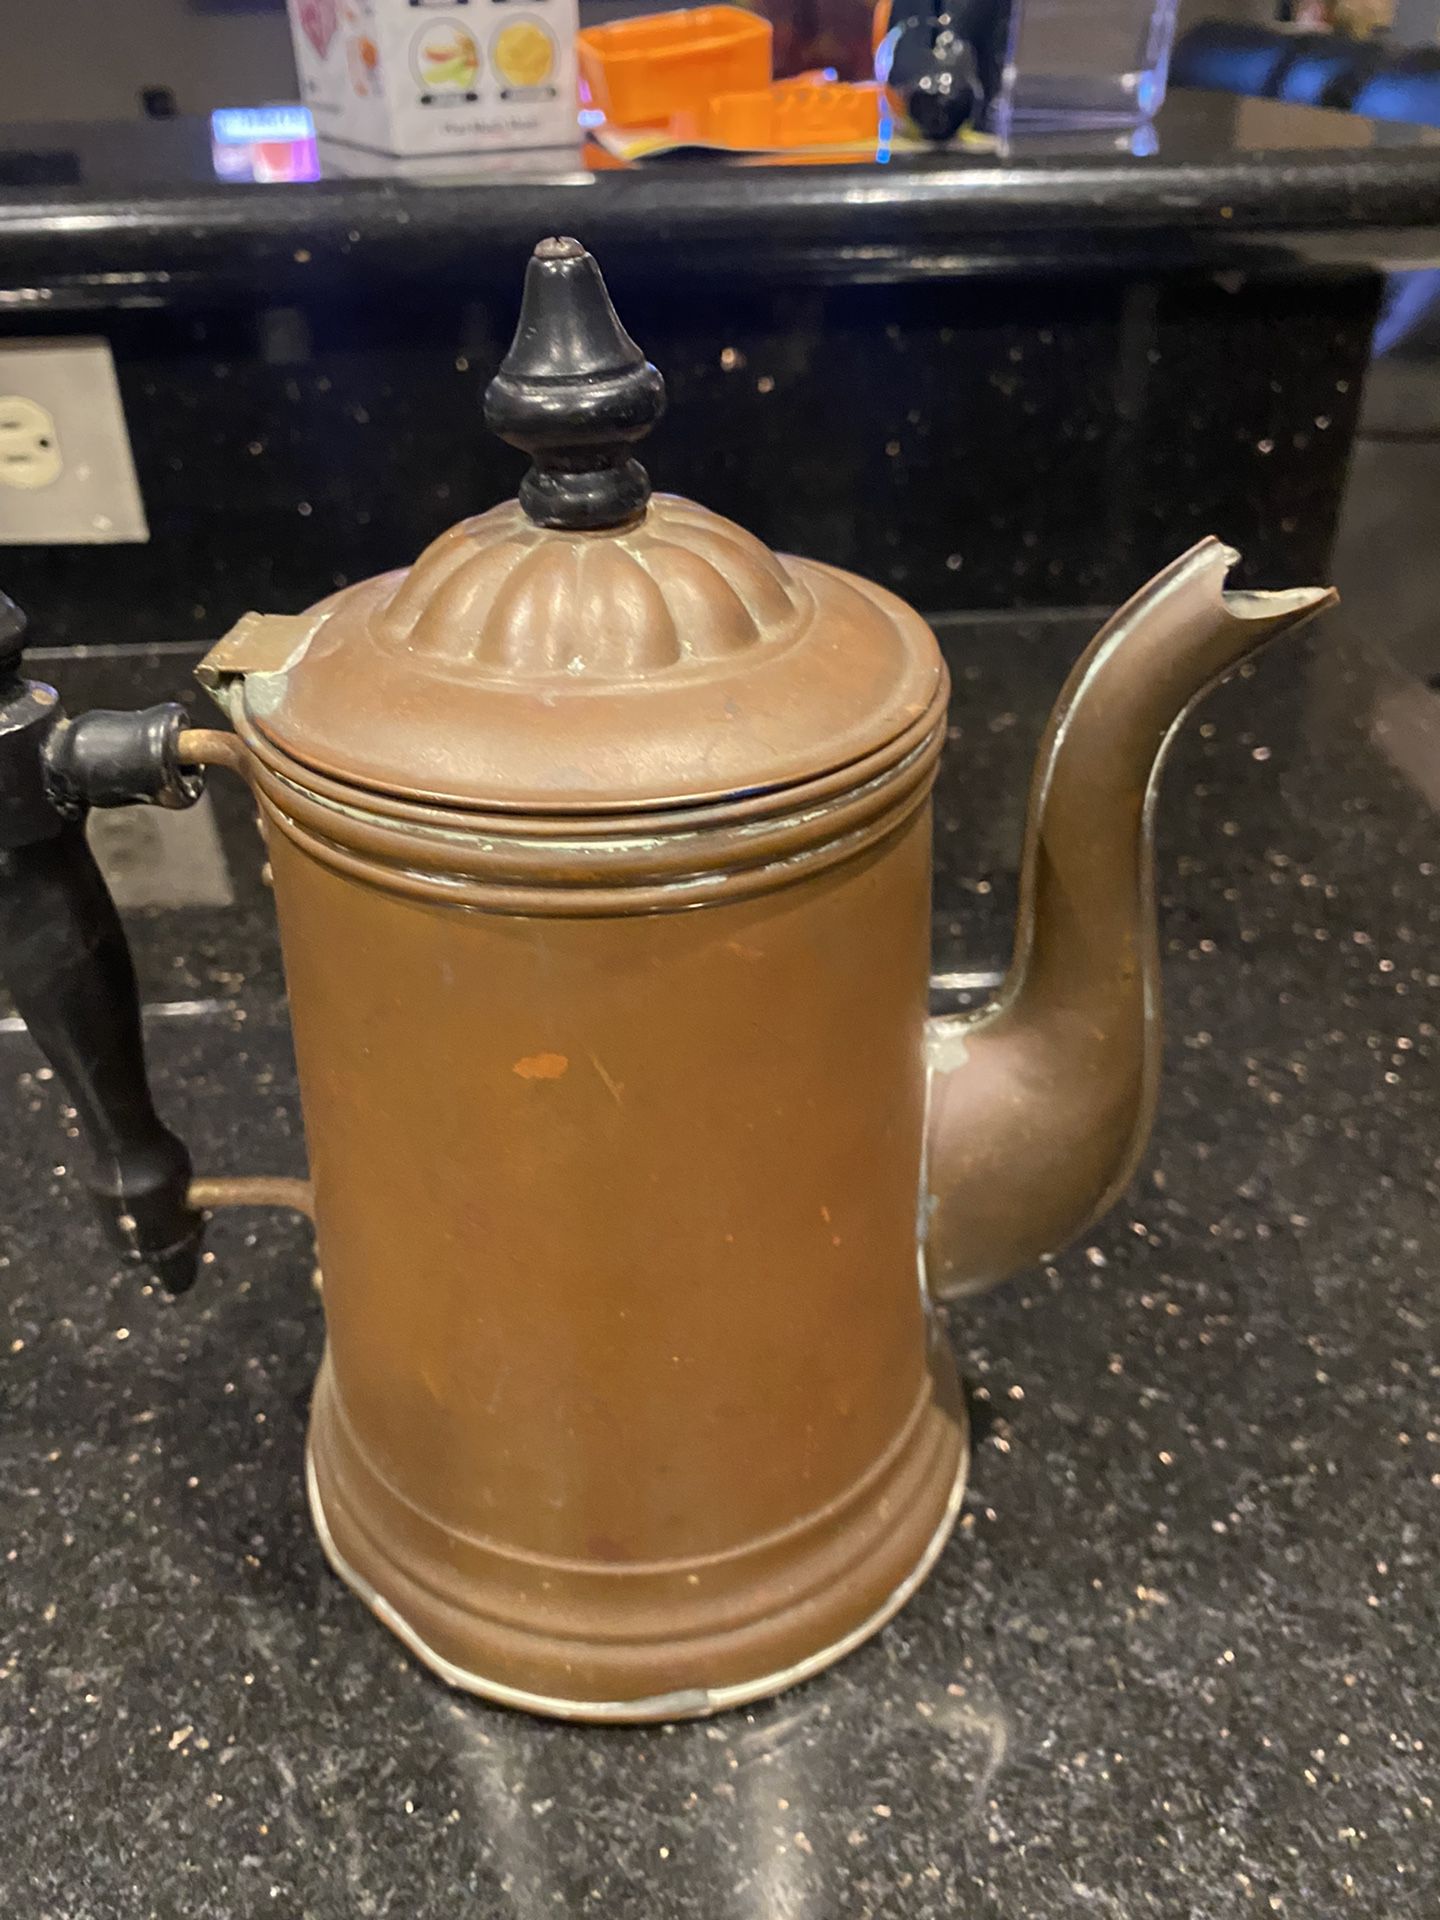 Antique Coffee Or Tea Pot Rome Metal ware Nickel plated copper coffee or tea pot server gooseneck spout